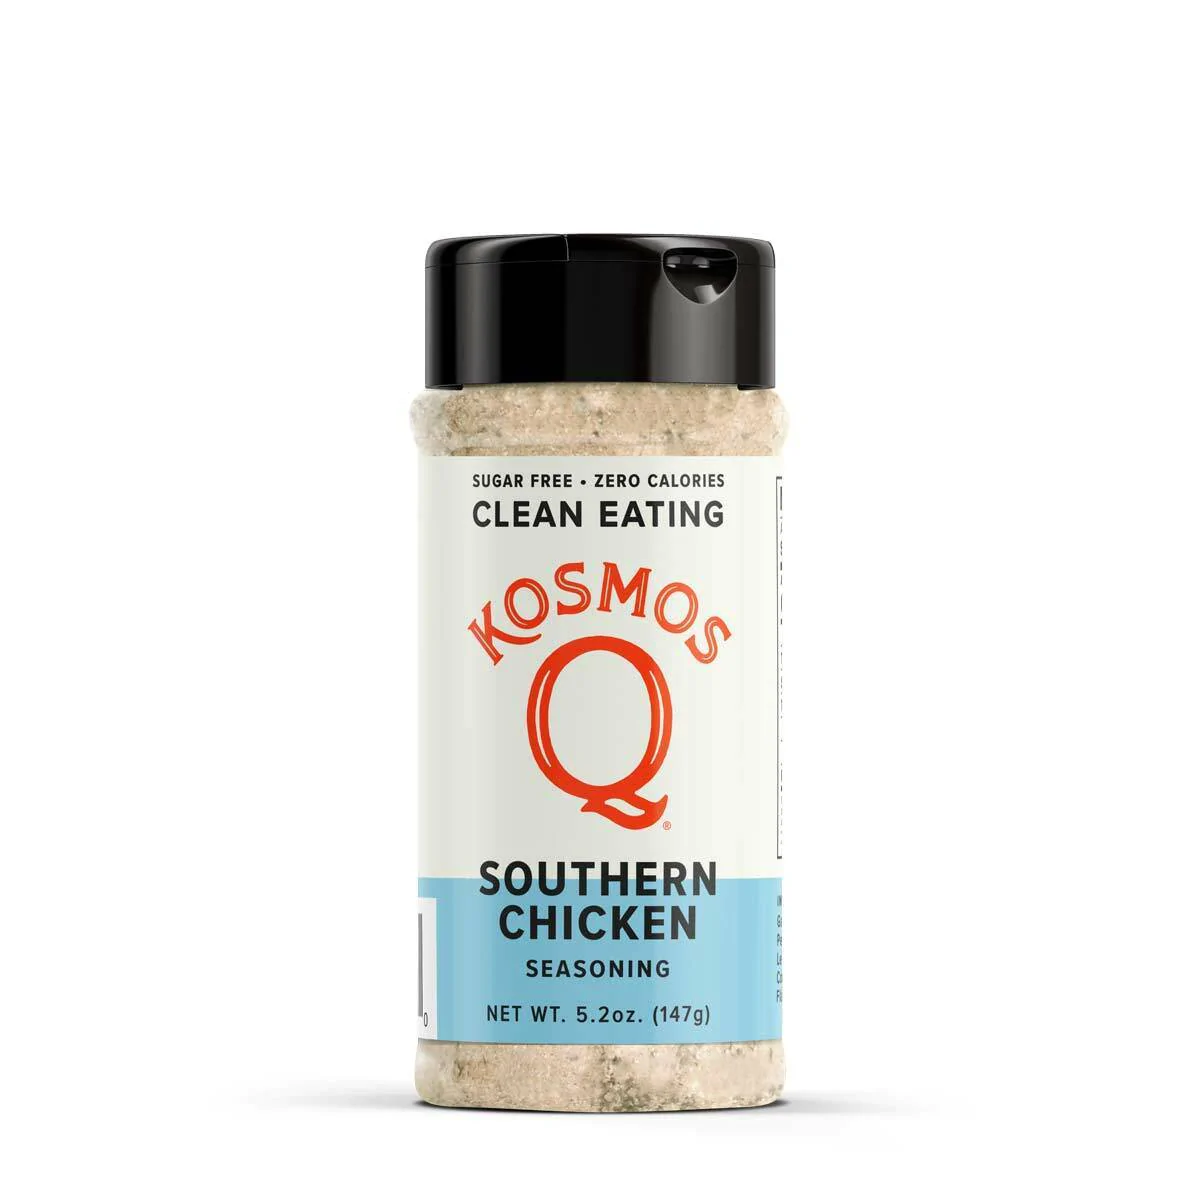 Cosmos Q - Southern Chicken Seasoning